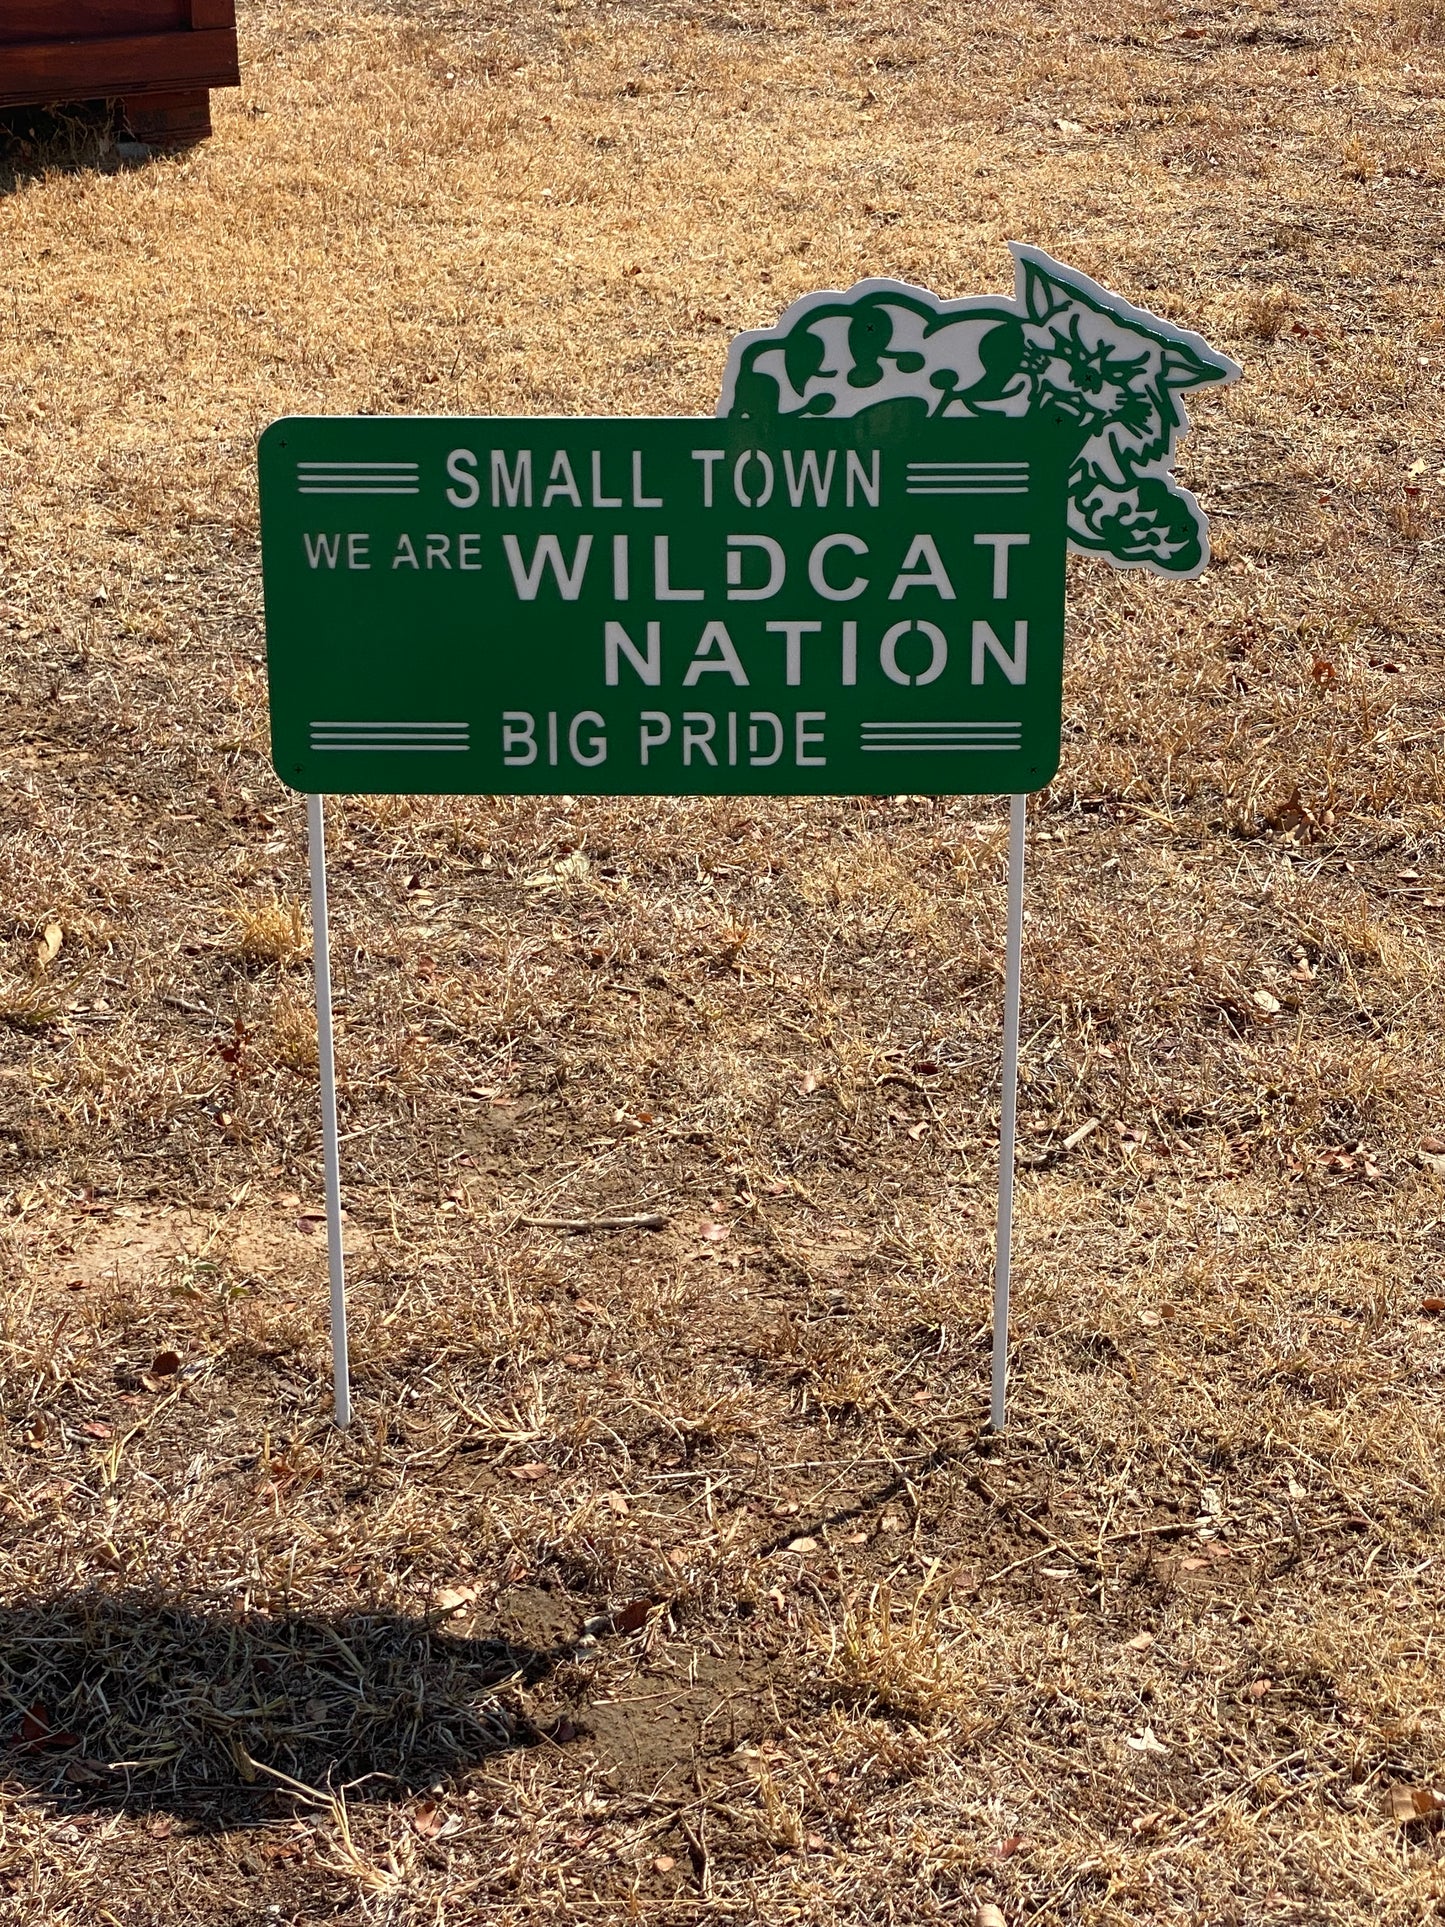 Small Town Big Pride Wildcat Nation Yard, Santo School Support, Santo High School